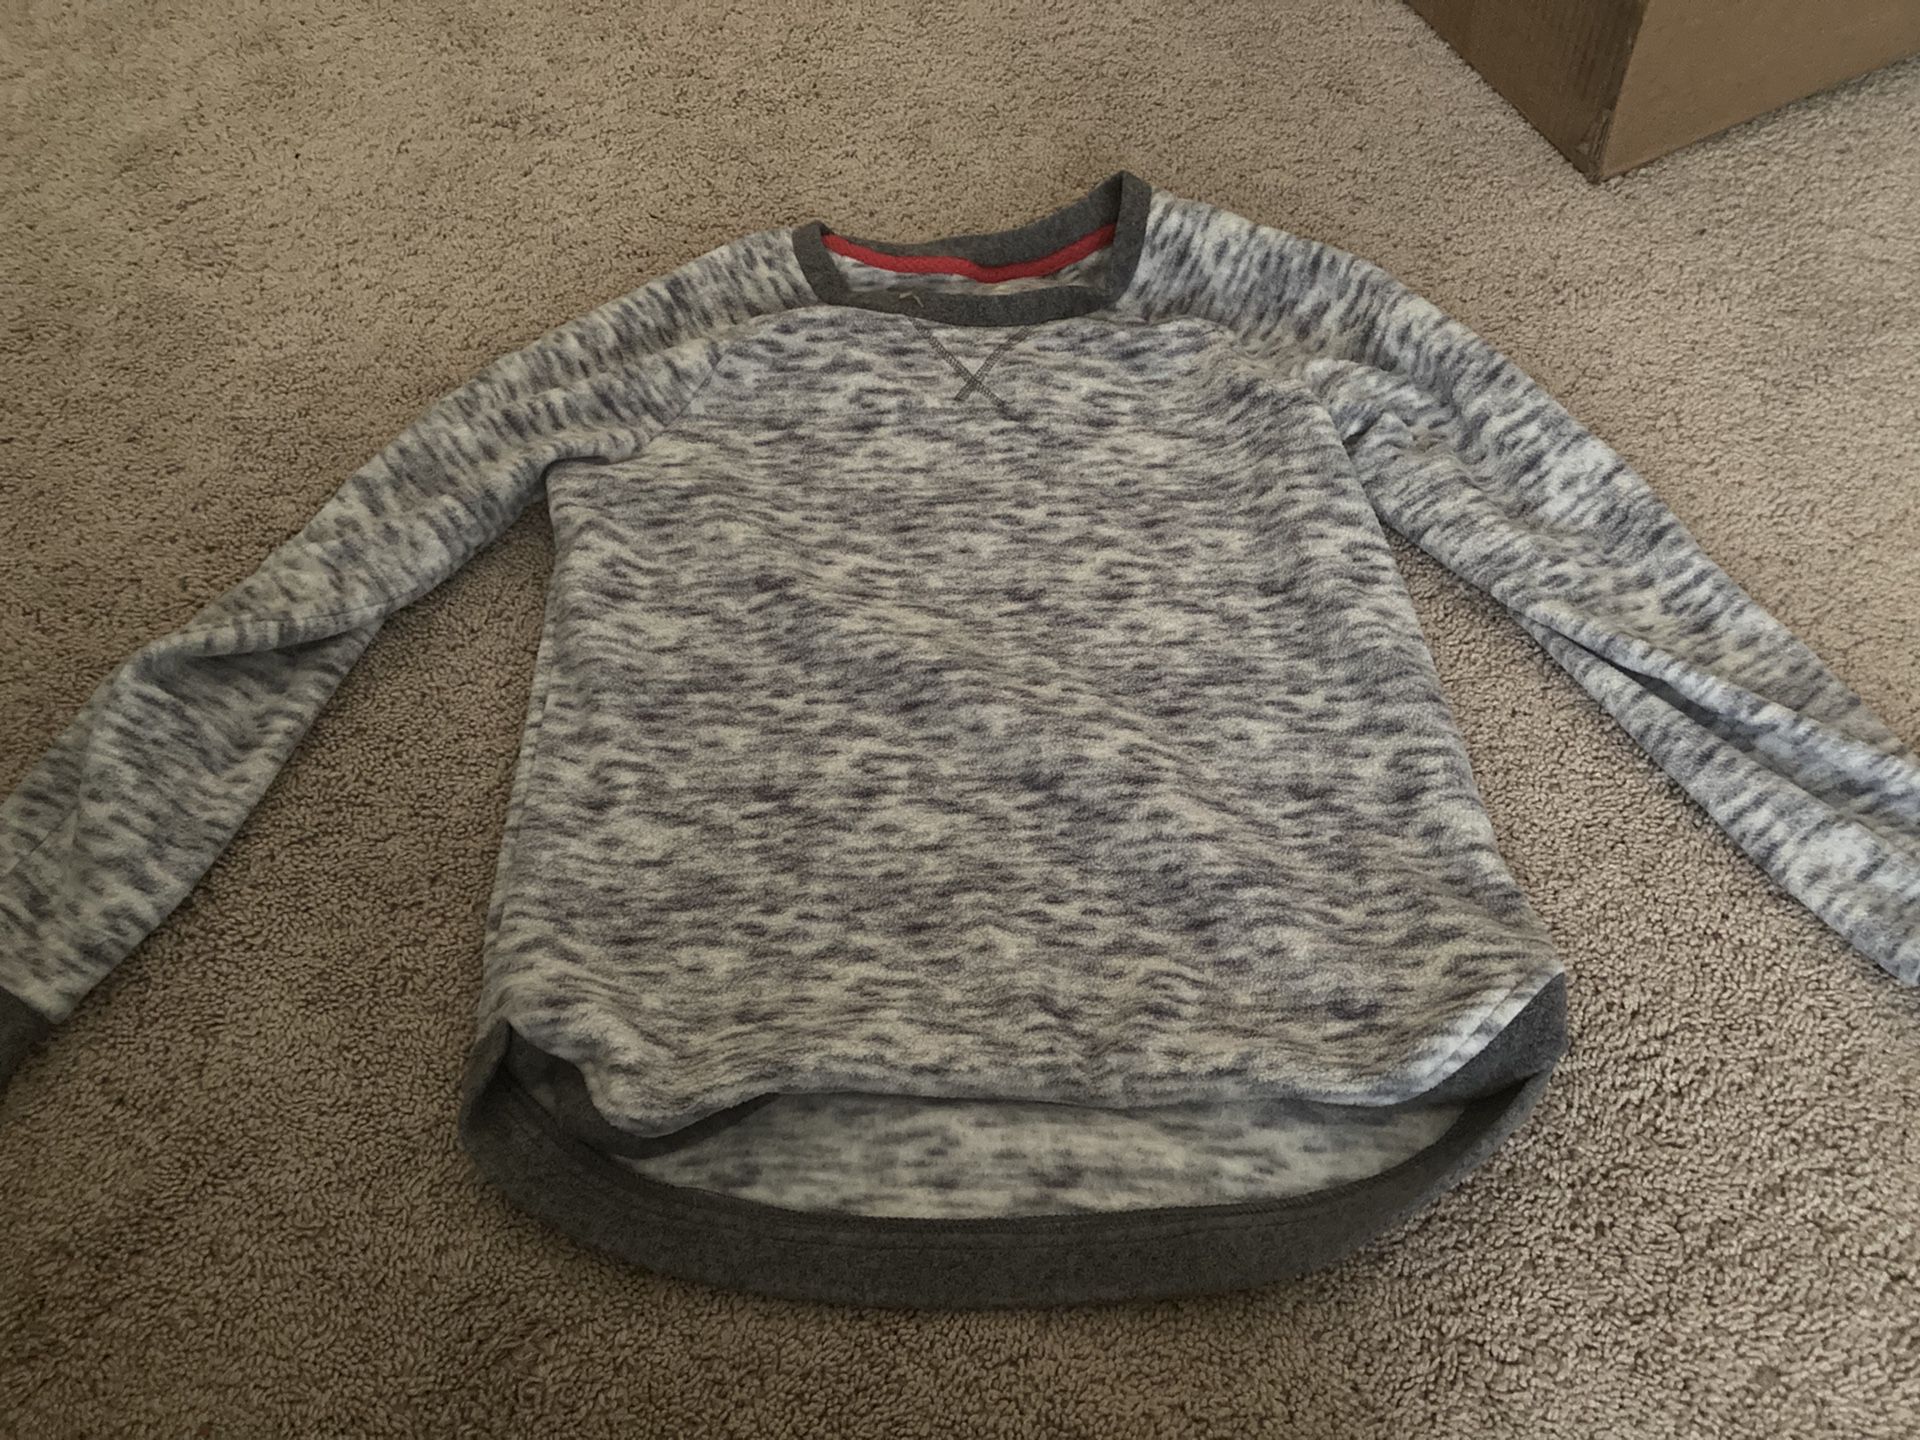 Clothes-sweater-kinda fuzzy